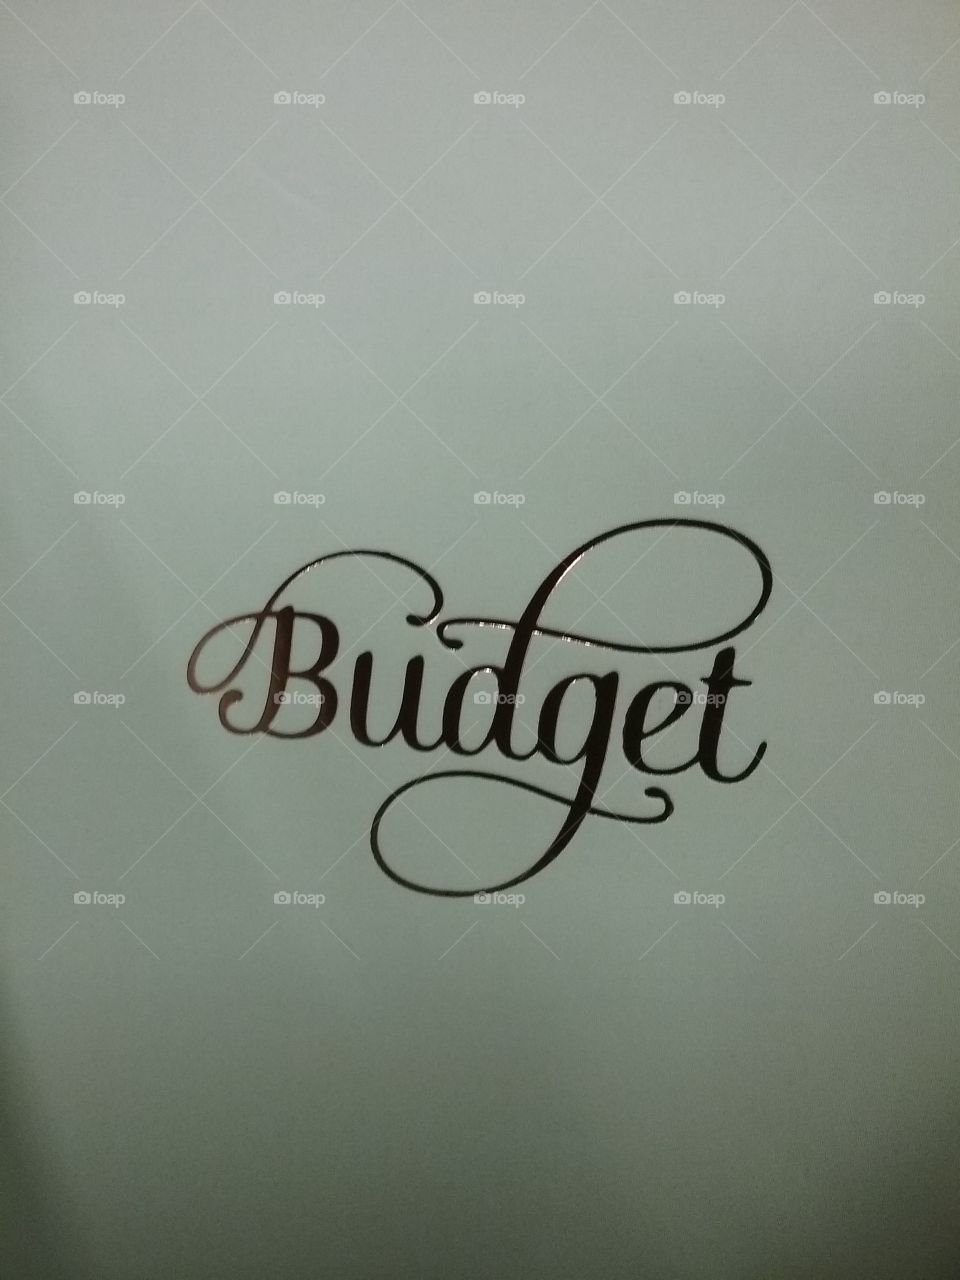 budget sign